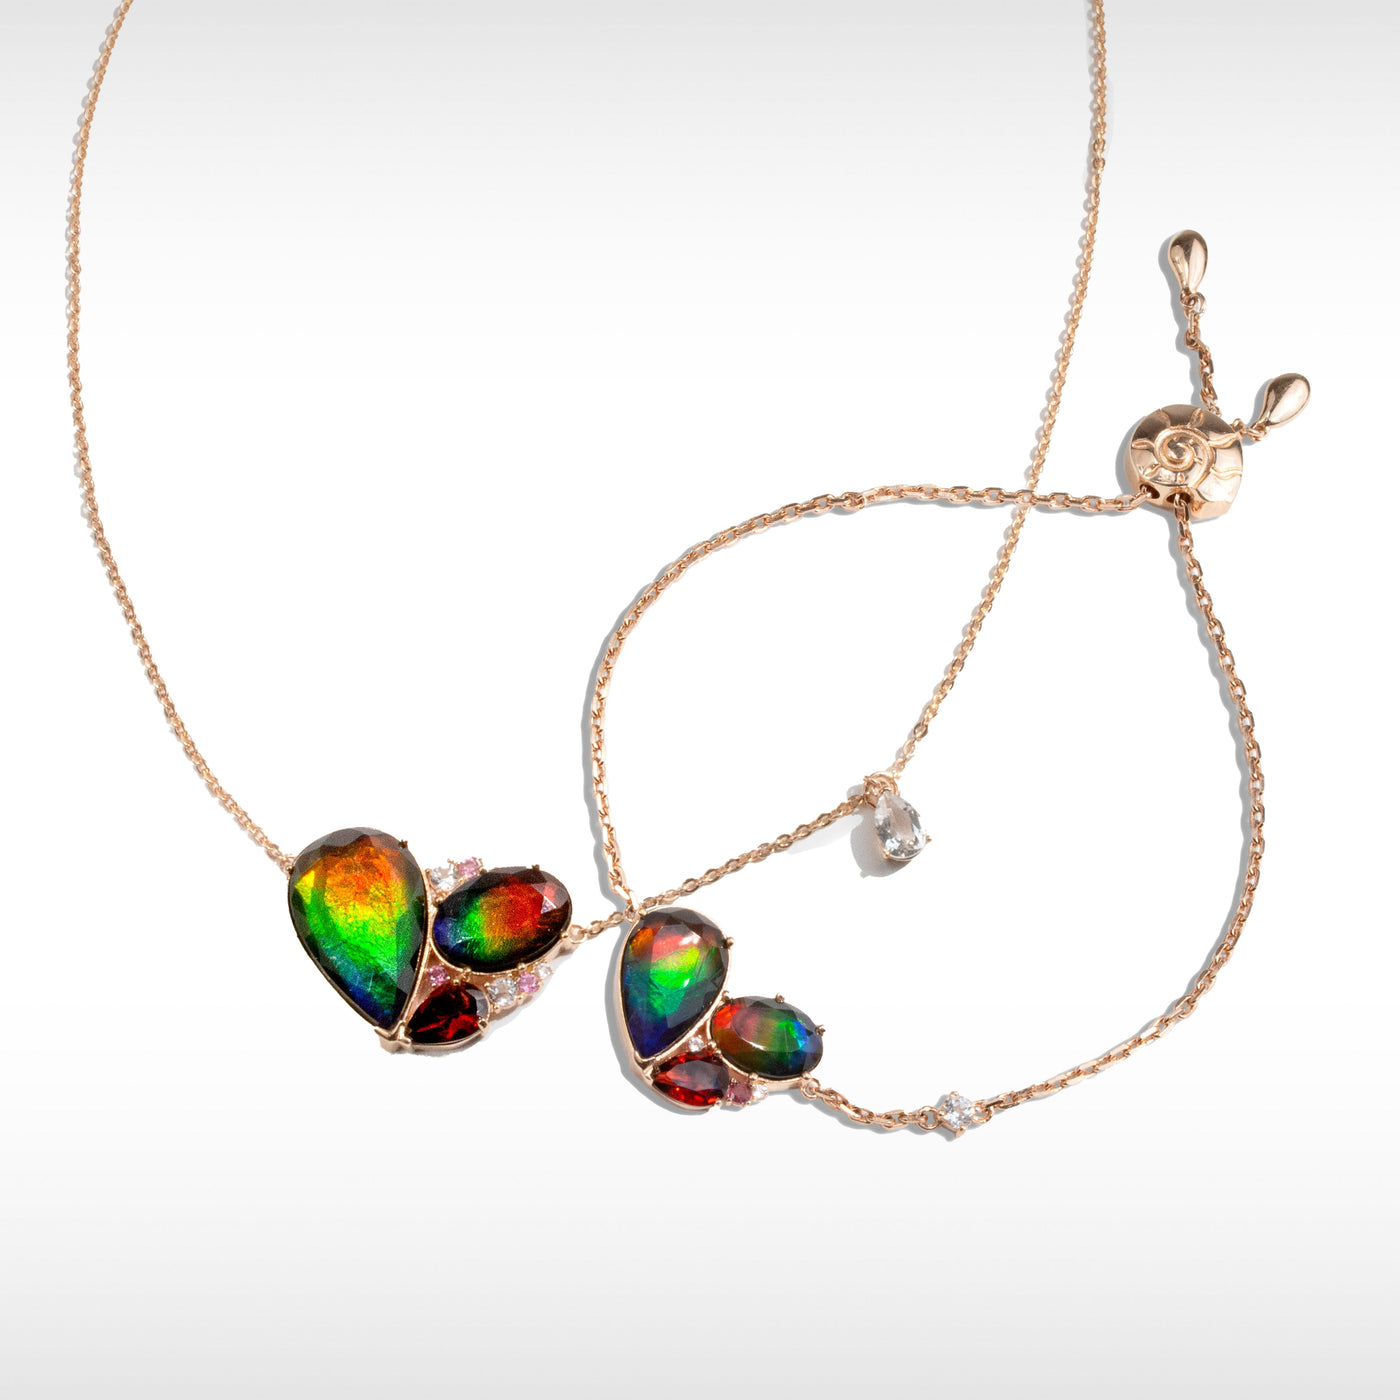 Adore ammolite pendant and bracelet set in 18K rose gold vermeil